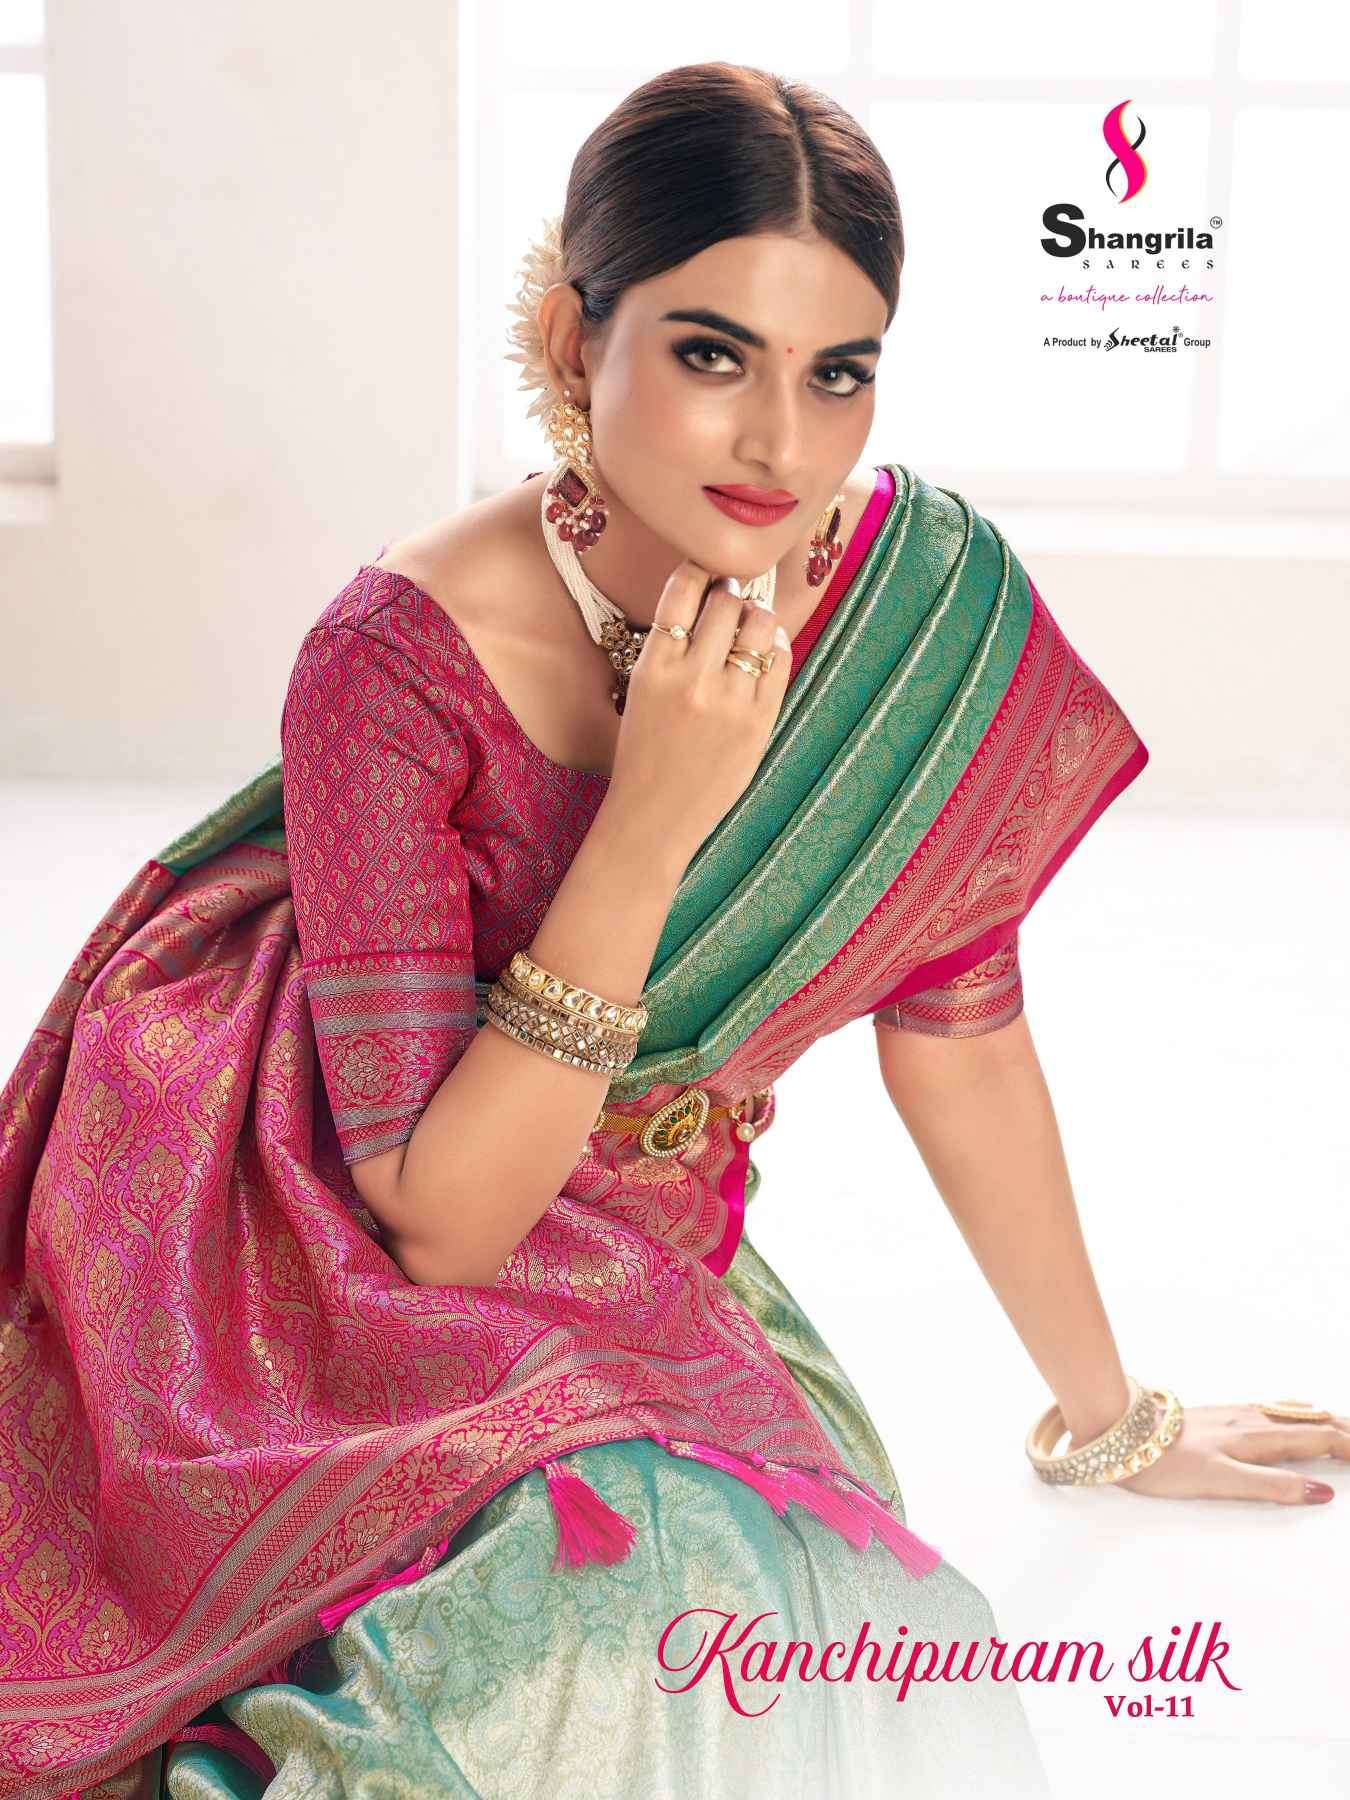 Shangrila Designer Kanchipuram Silk Vol 11 Fancy Silk Saree Latest Collection